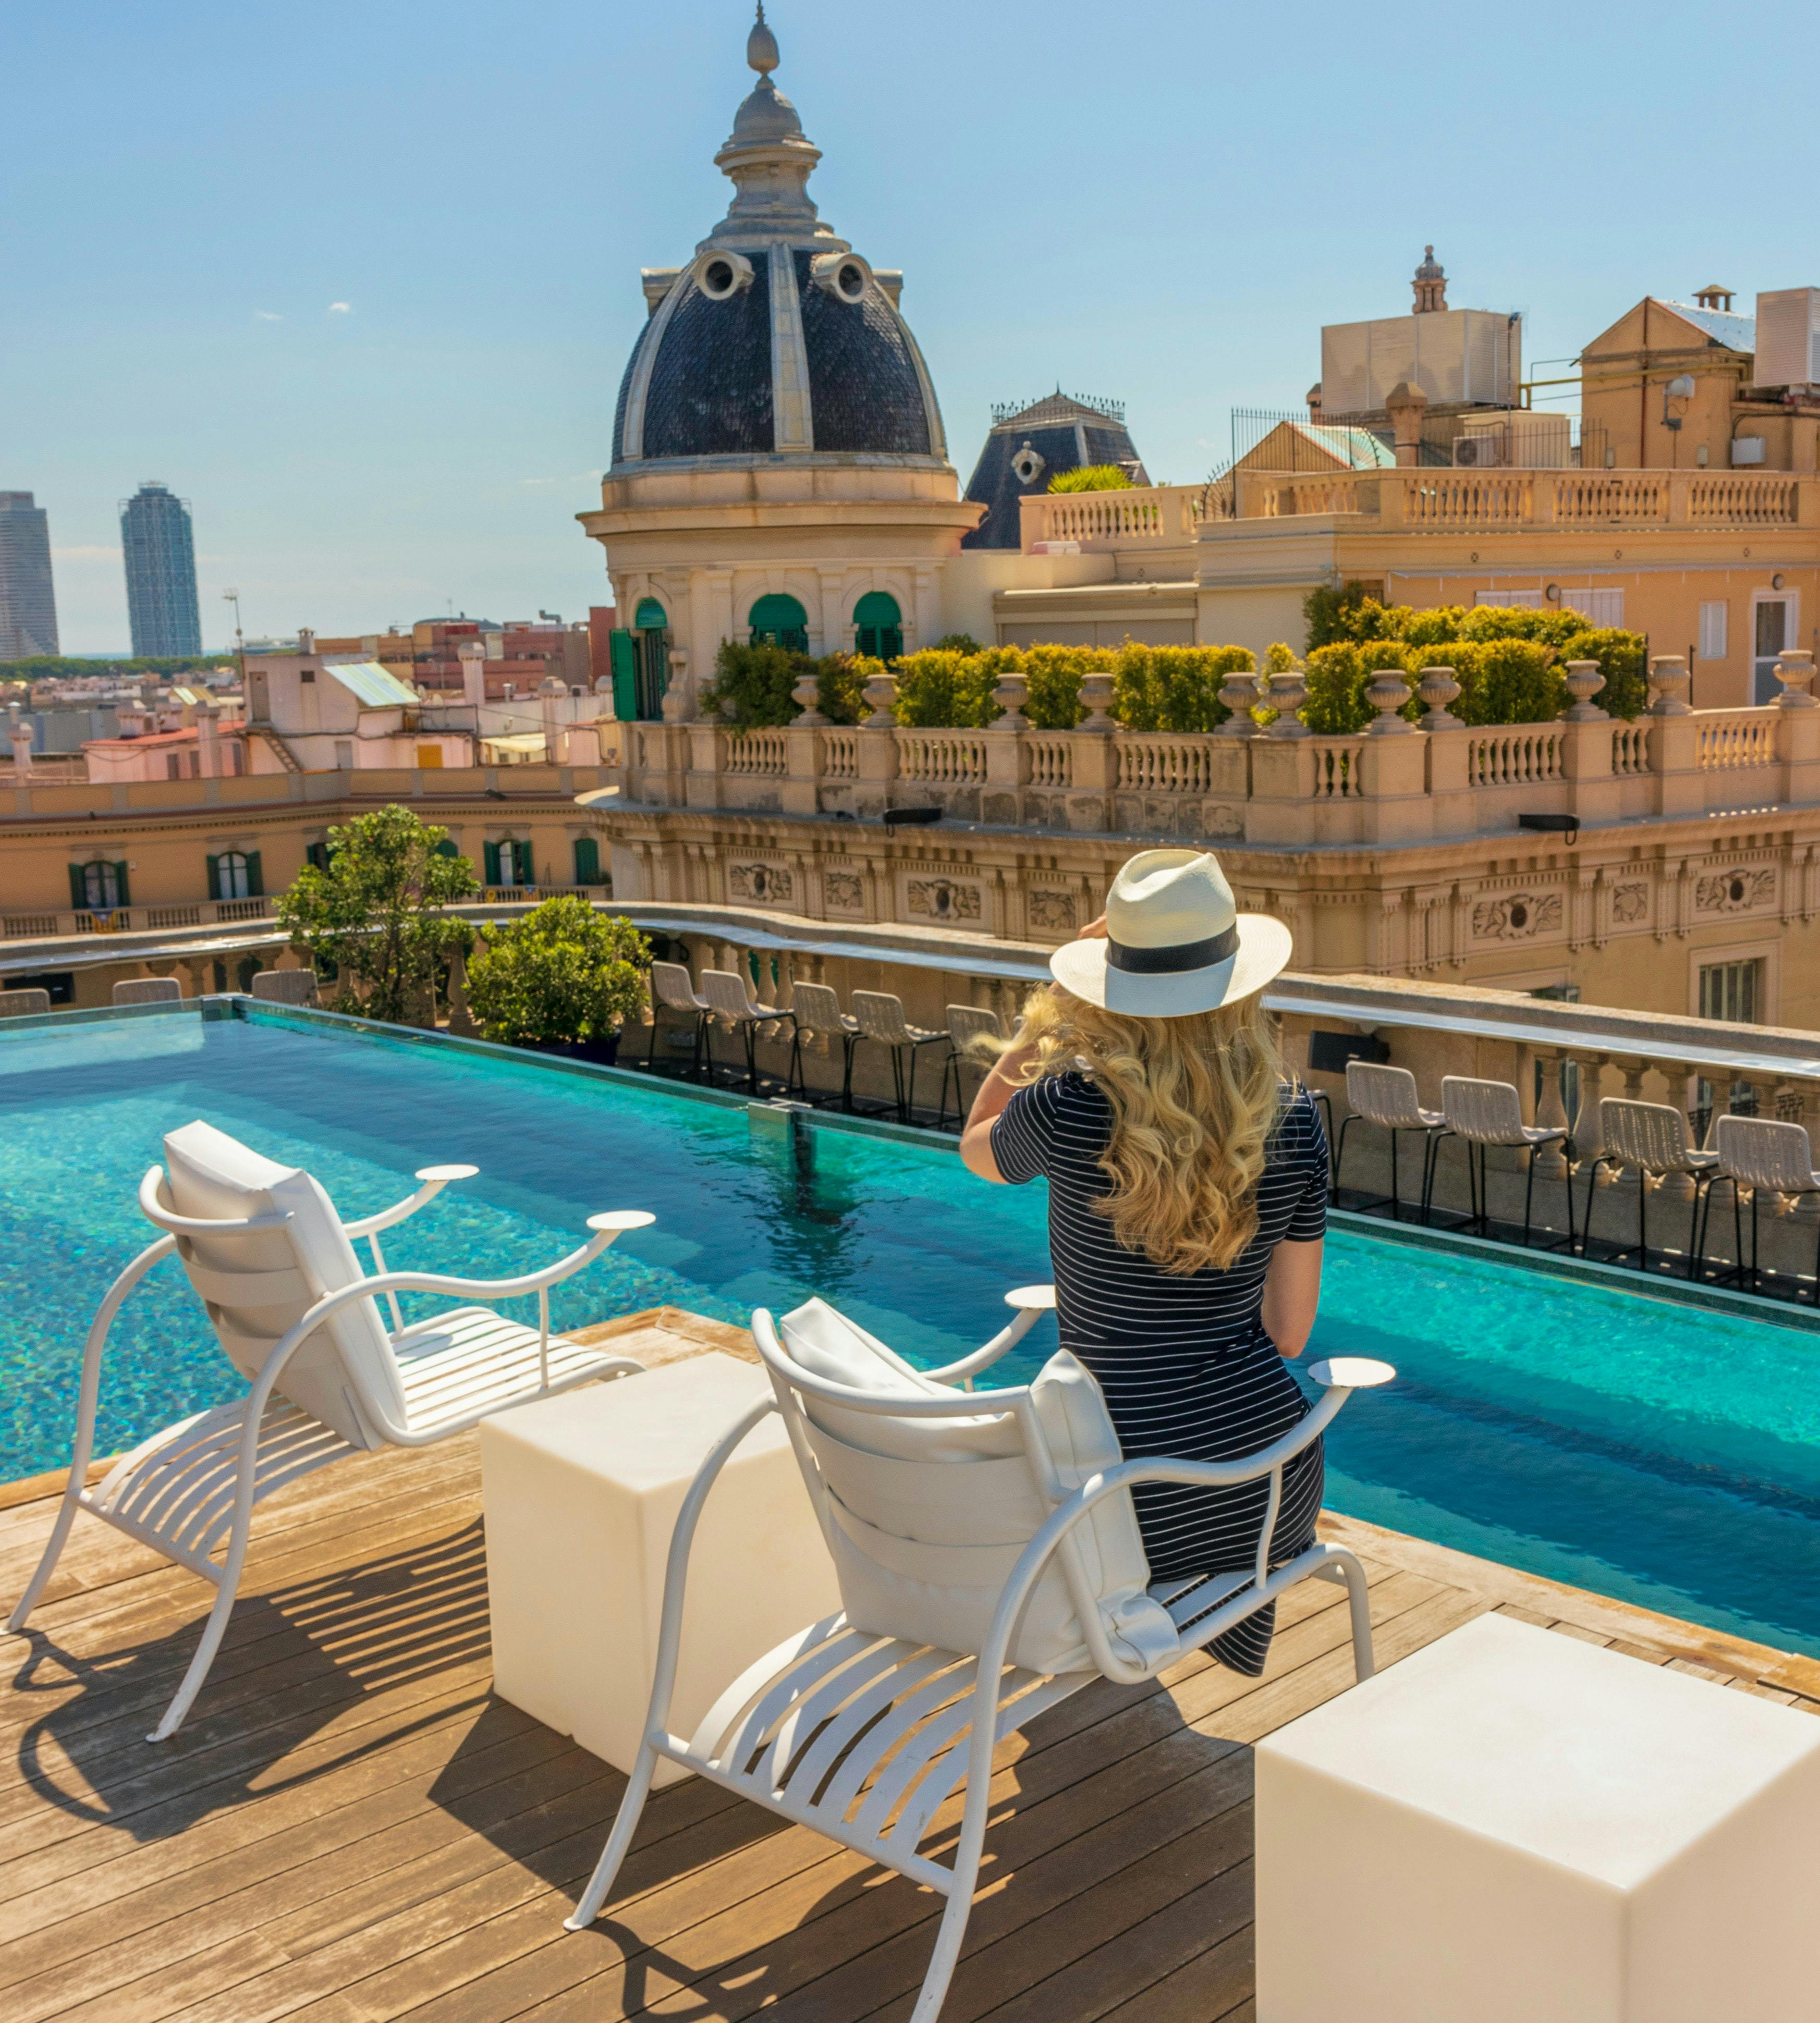 Hotel swimming pool in Barcelona